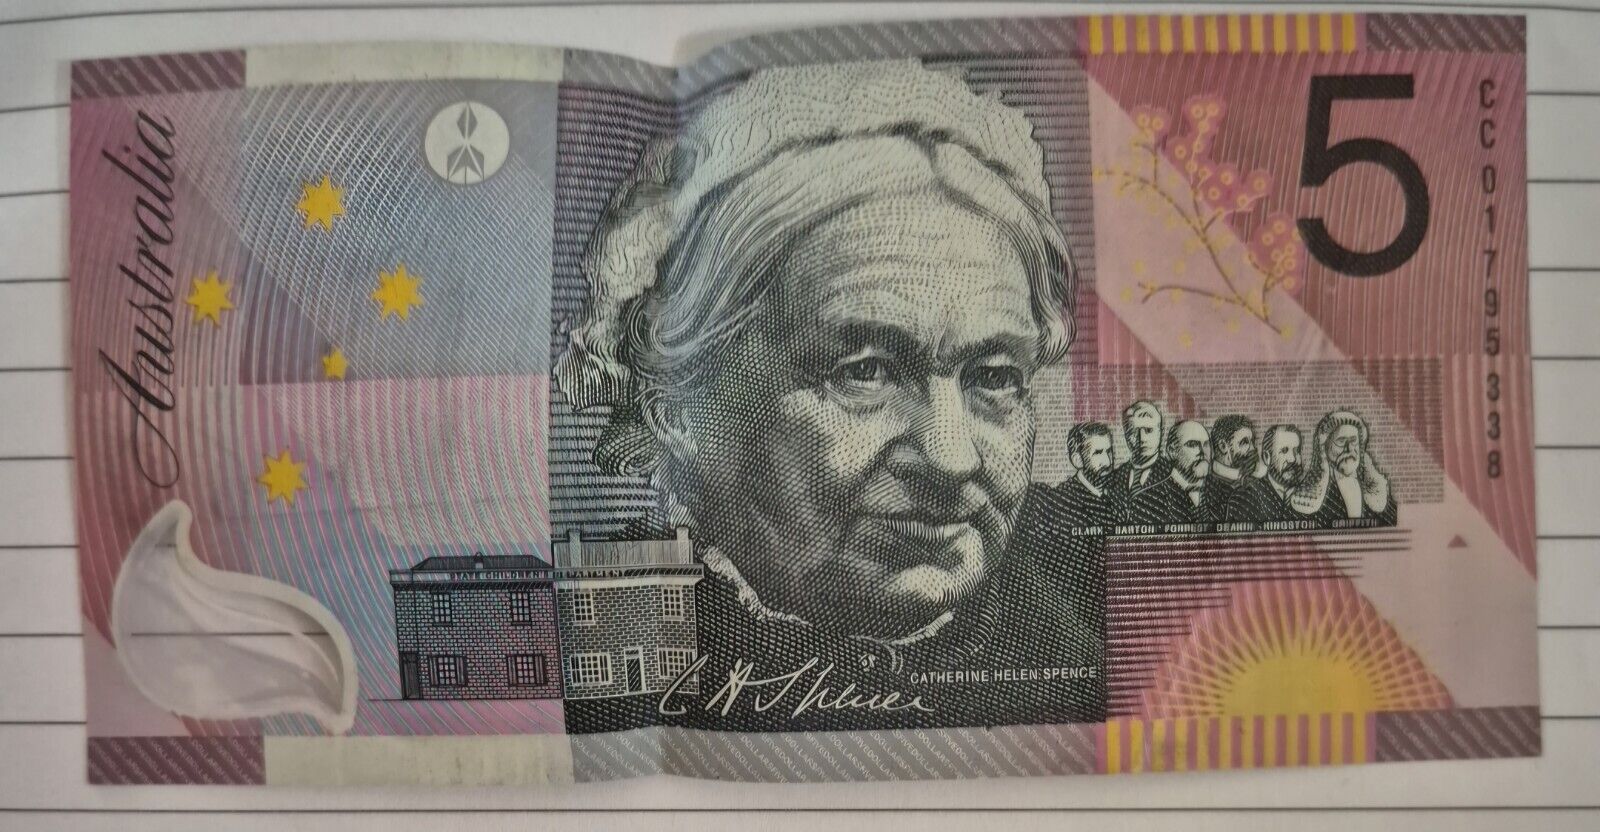 Rare Australian Federation $5 dollar note